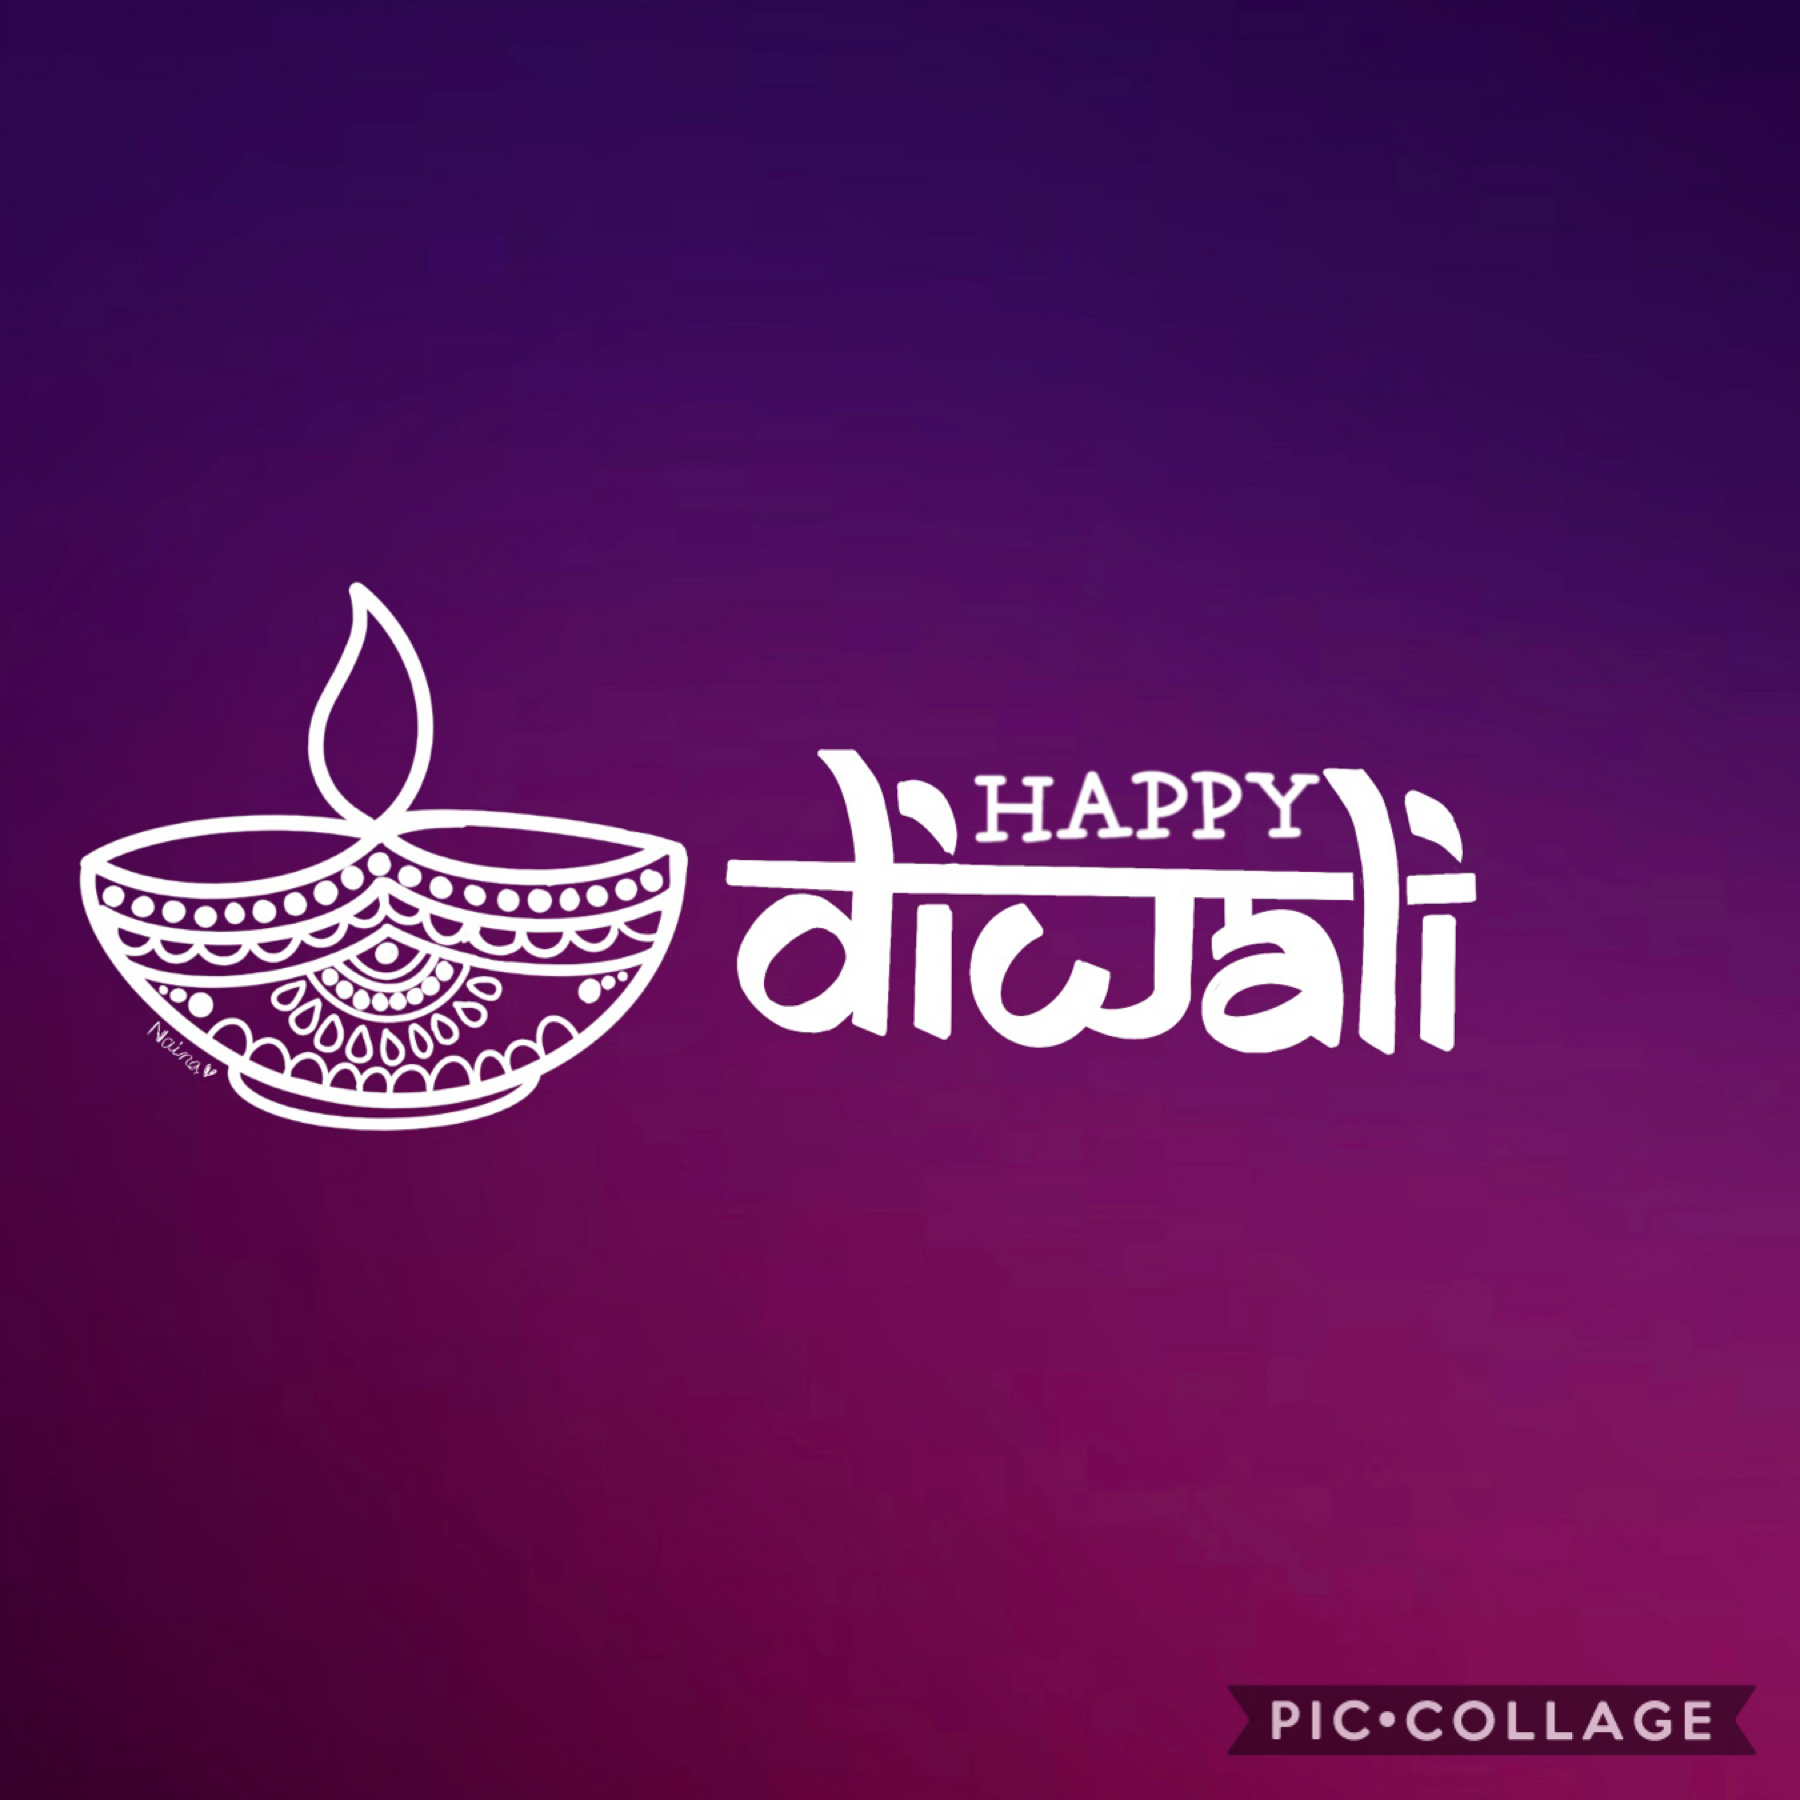 If anyone celebrates Diwali, Happy Diwali! 